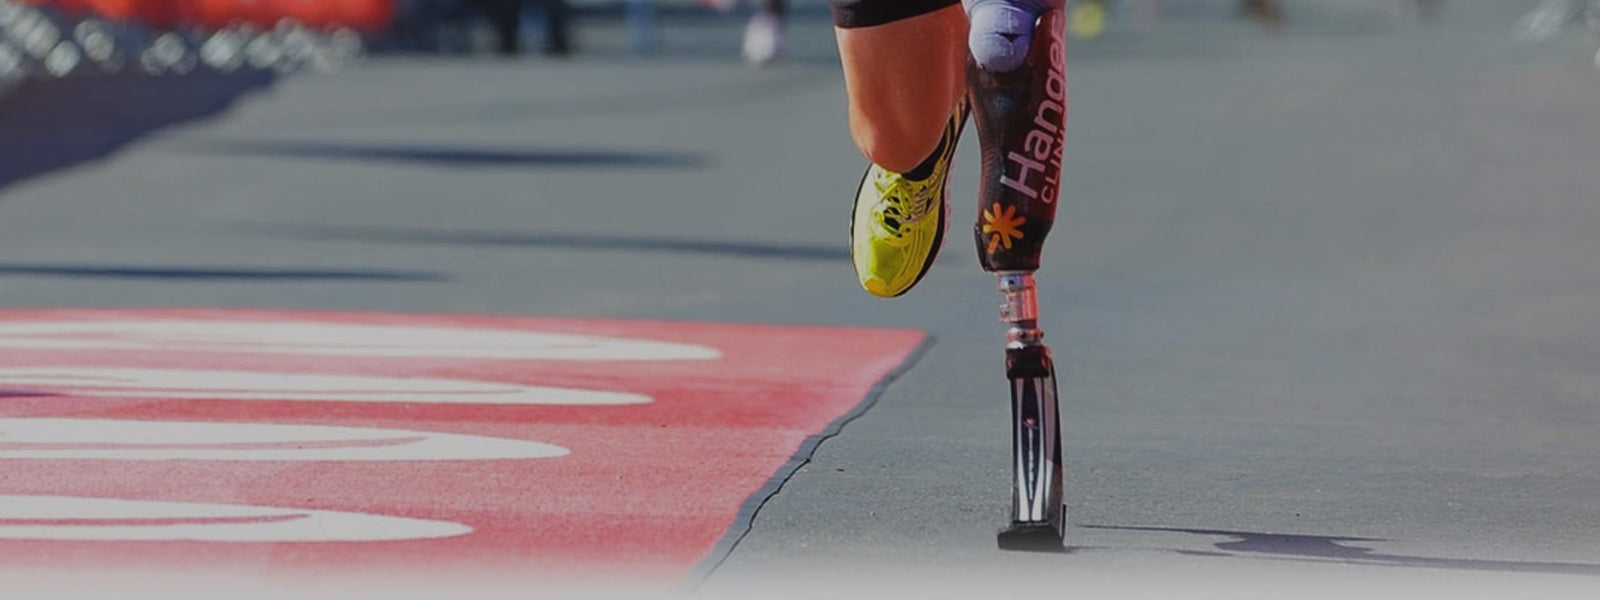 Adaptive/Amputee Socks Header Image, Man running with prosthetic leg